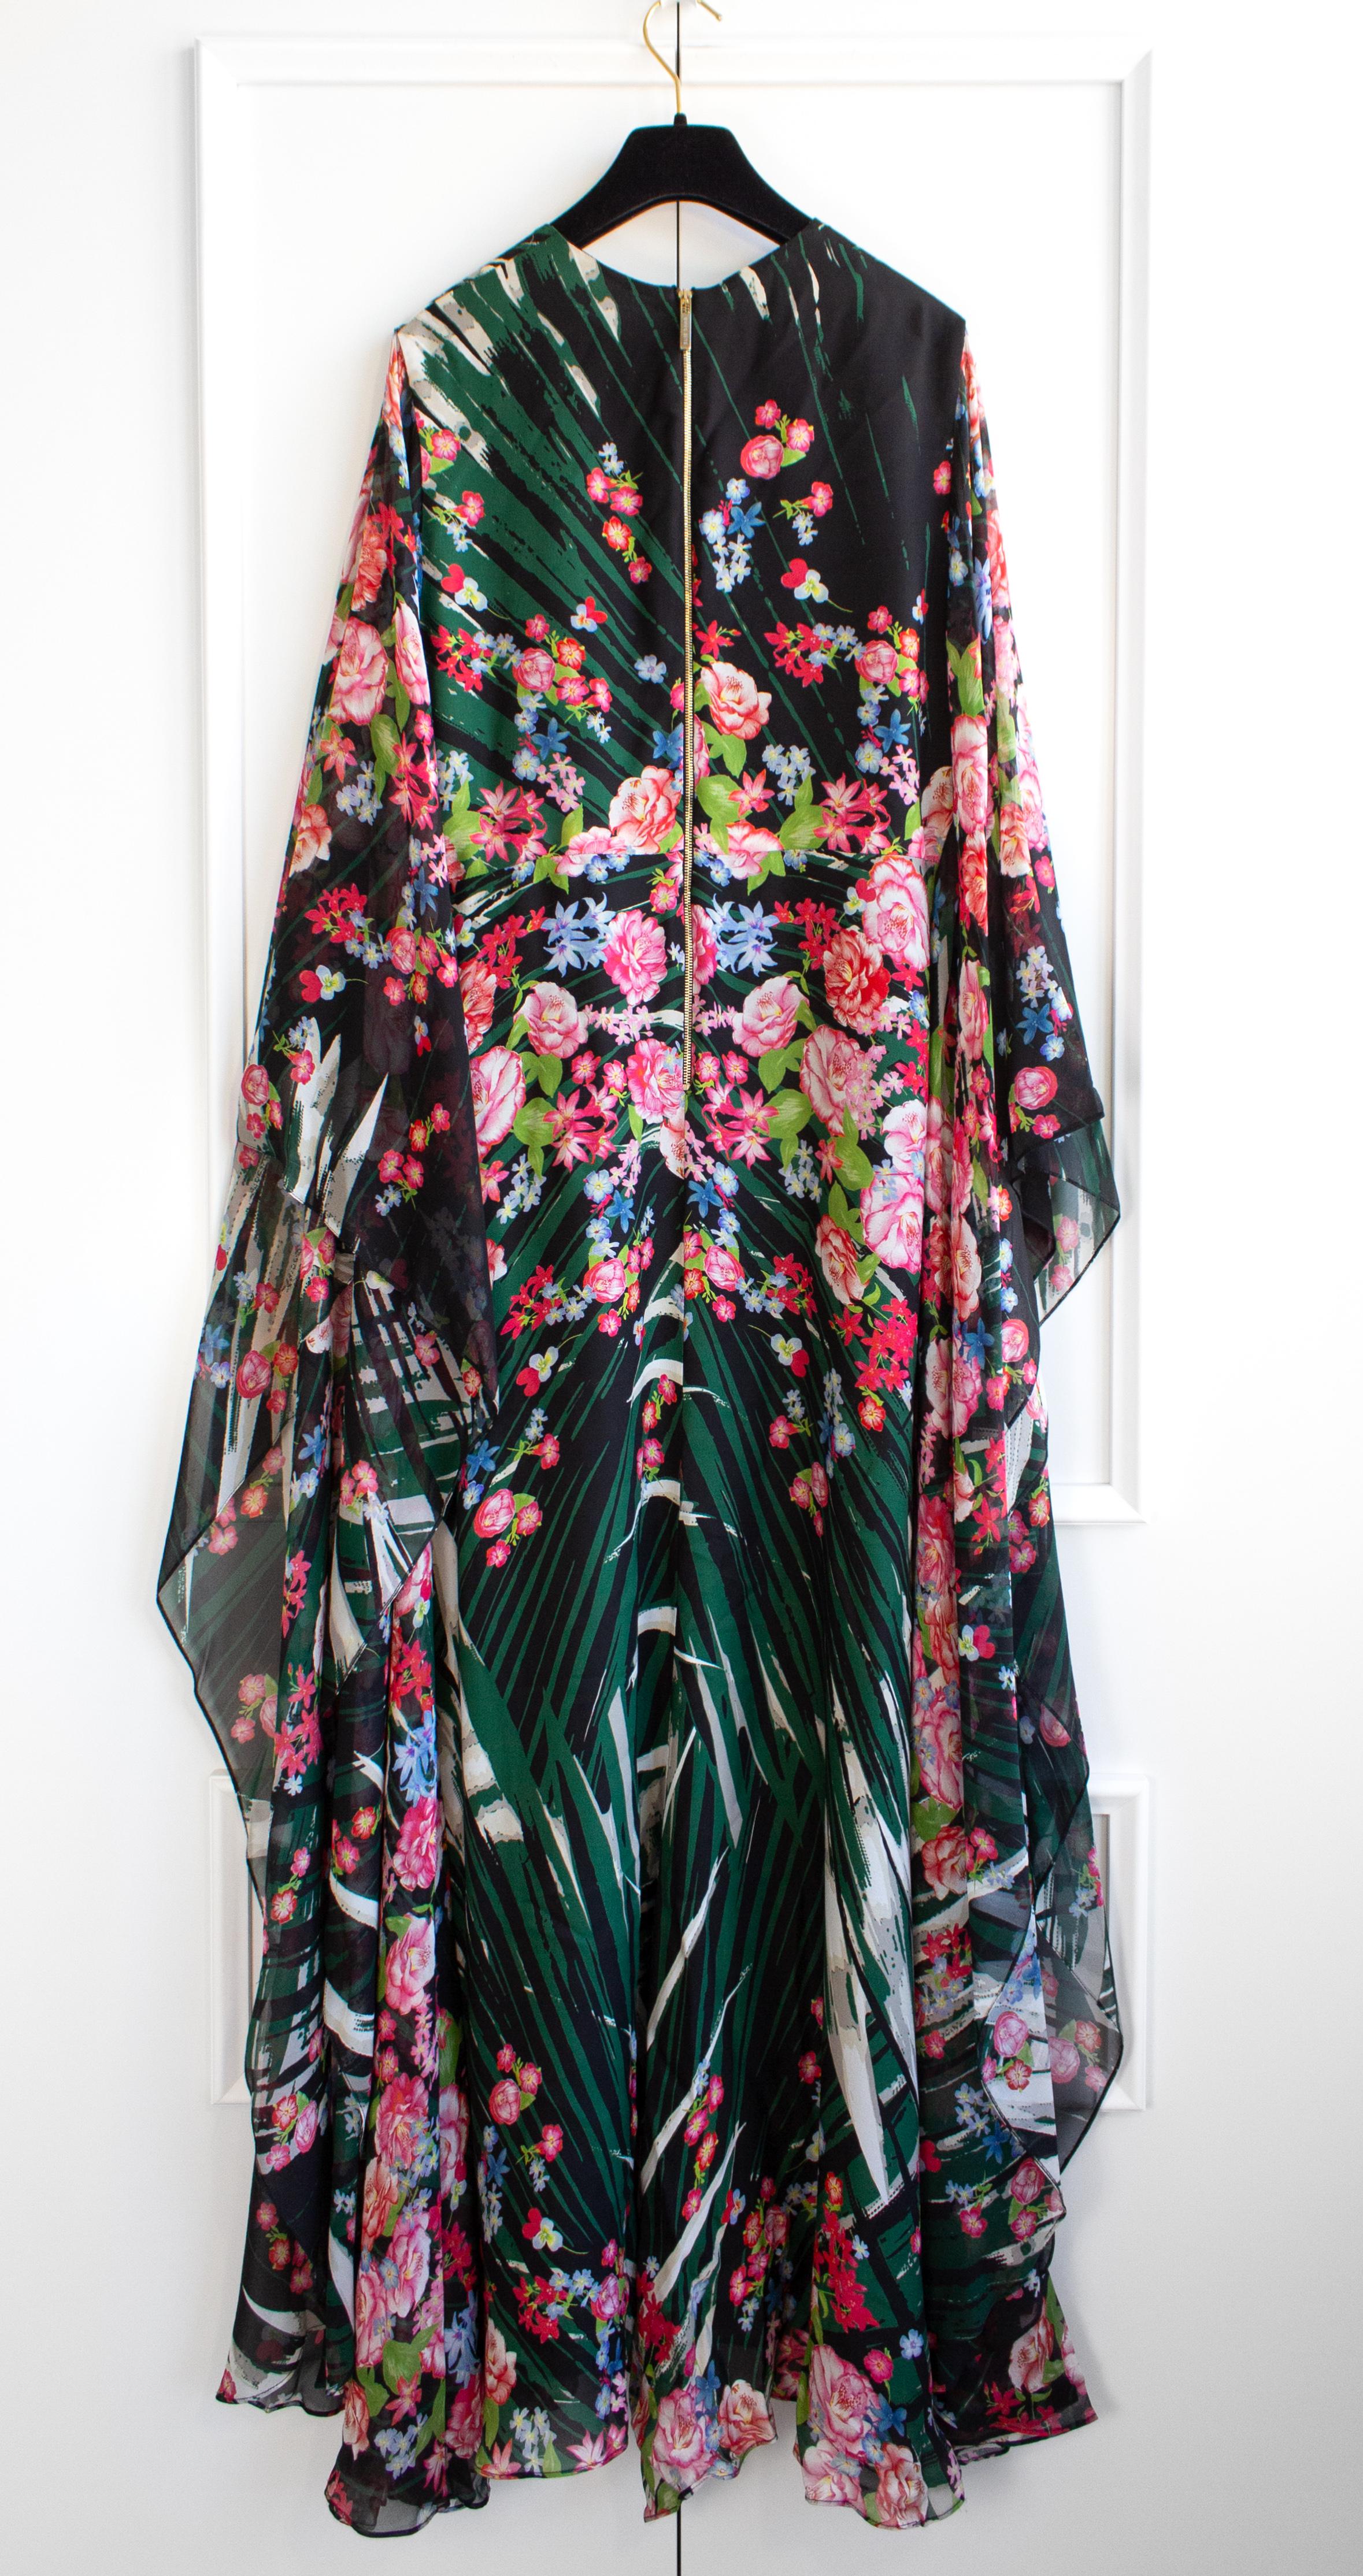  Elie Saab Floral Print Palm Leaf Maxi Multicolor Green Pink Caftan Gown Dress 4